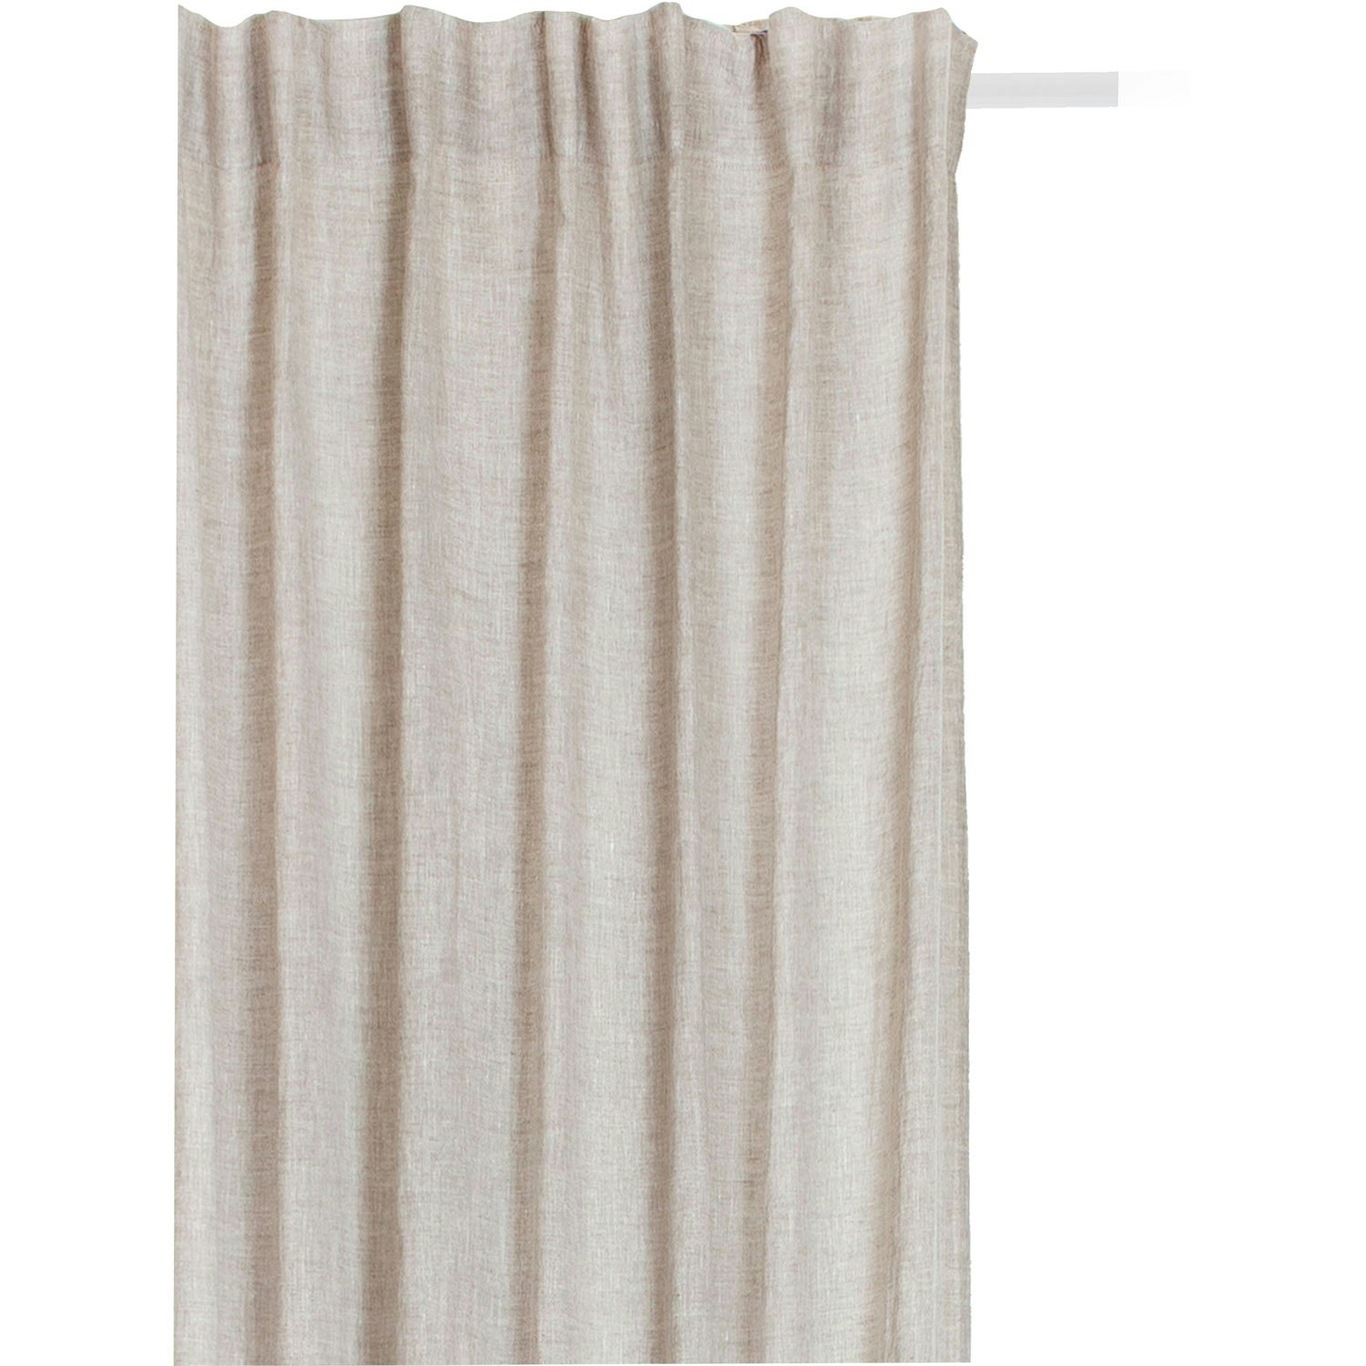 Sunrise Curtain With Pleat Band 140x290 cm, Oatmeal